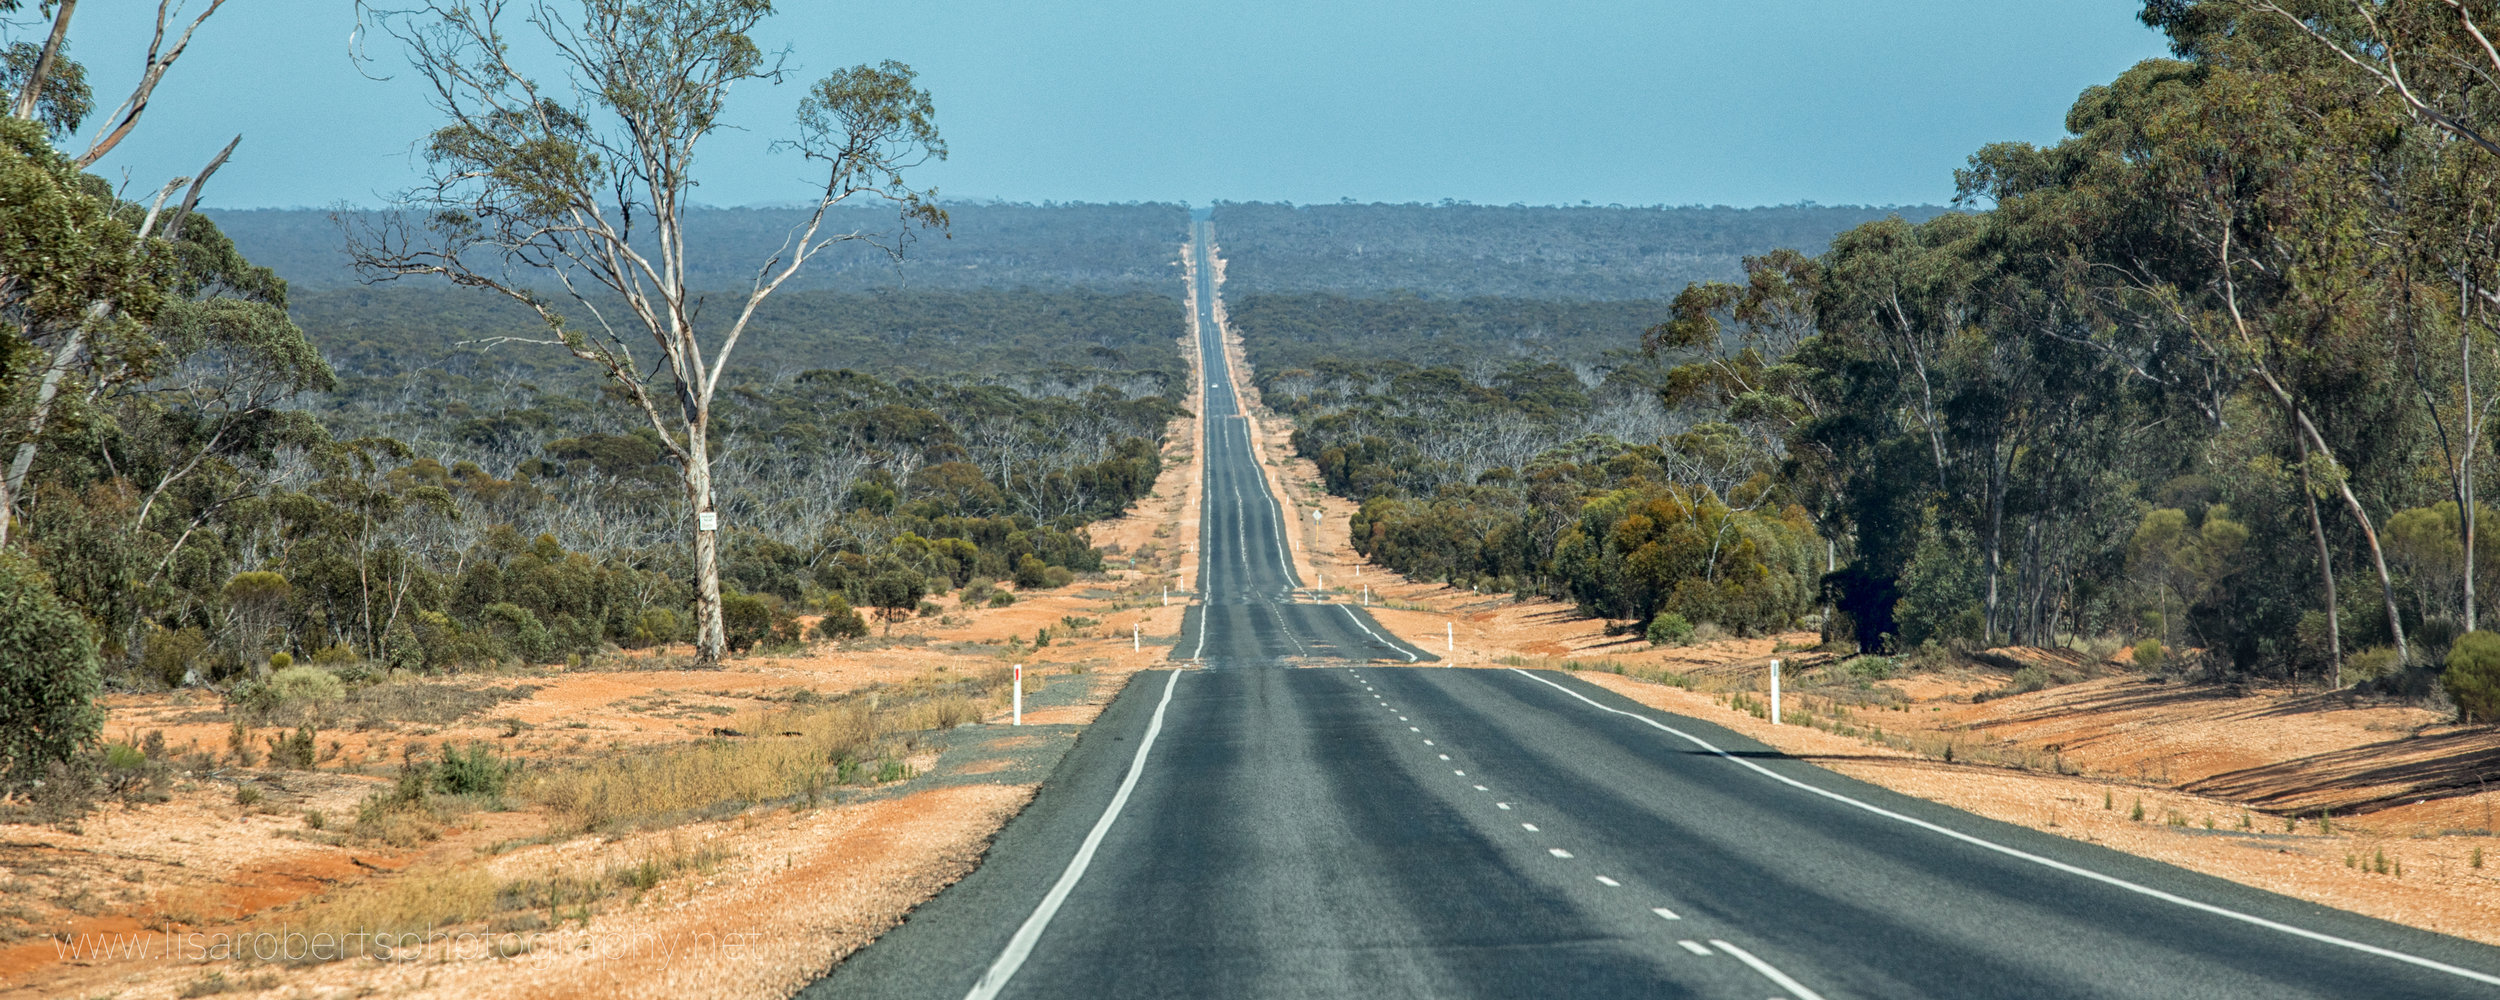  The Eyre Highway Western Australia 